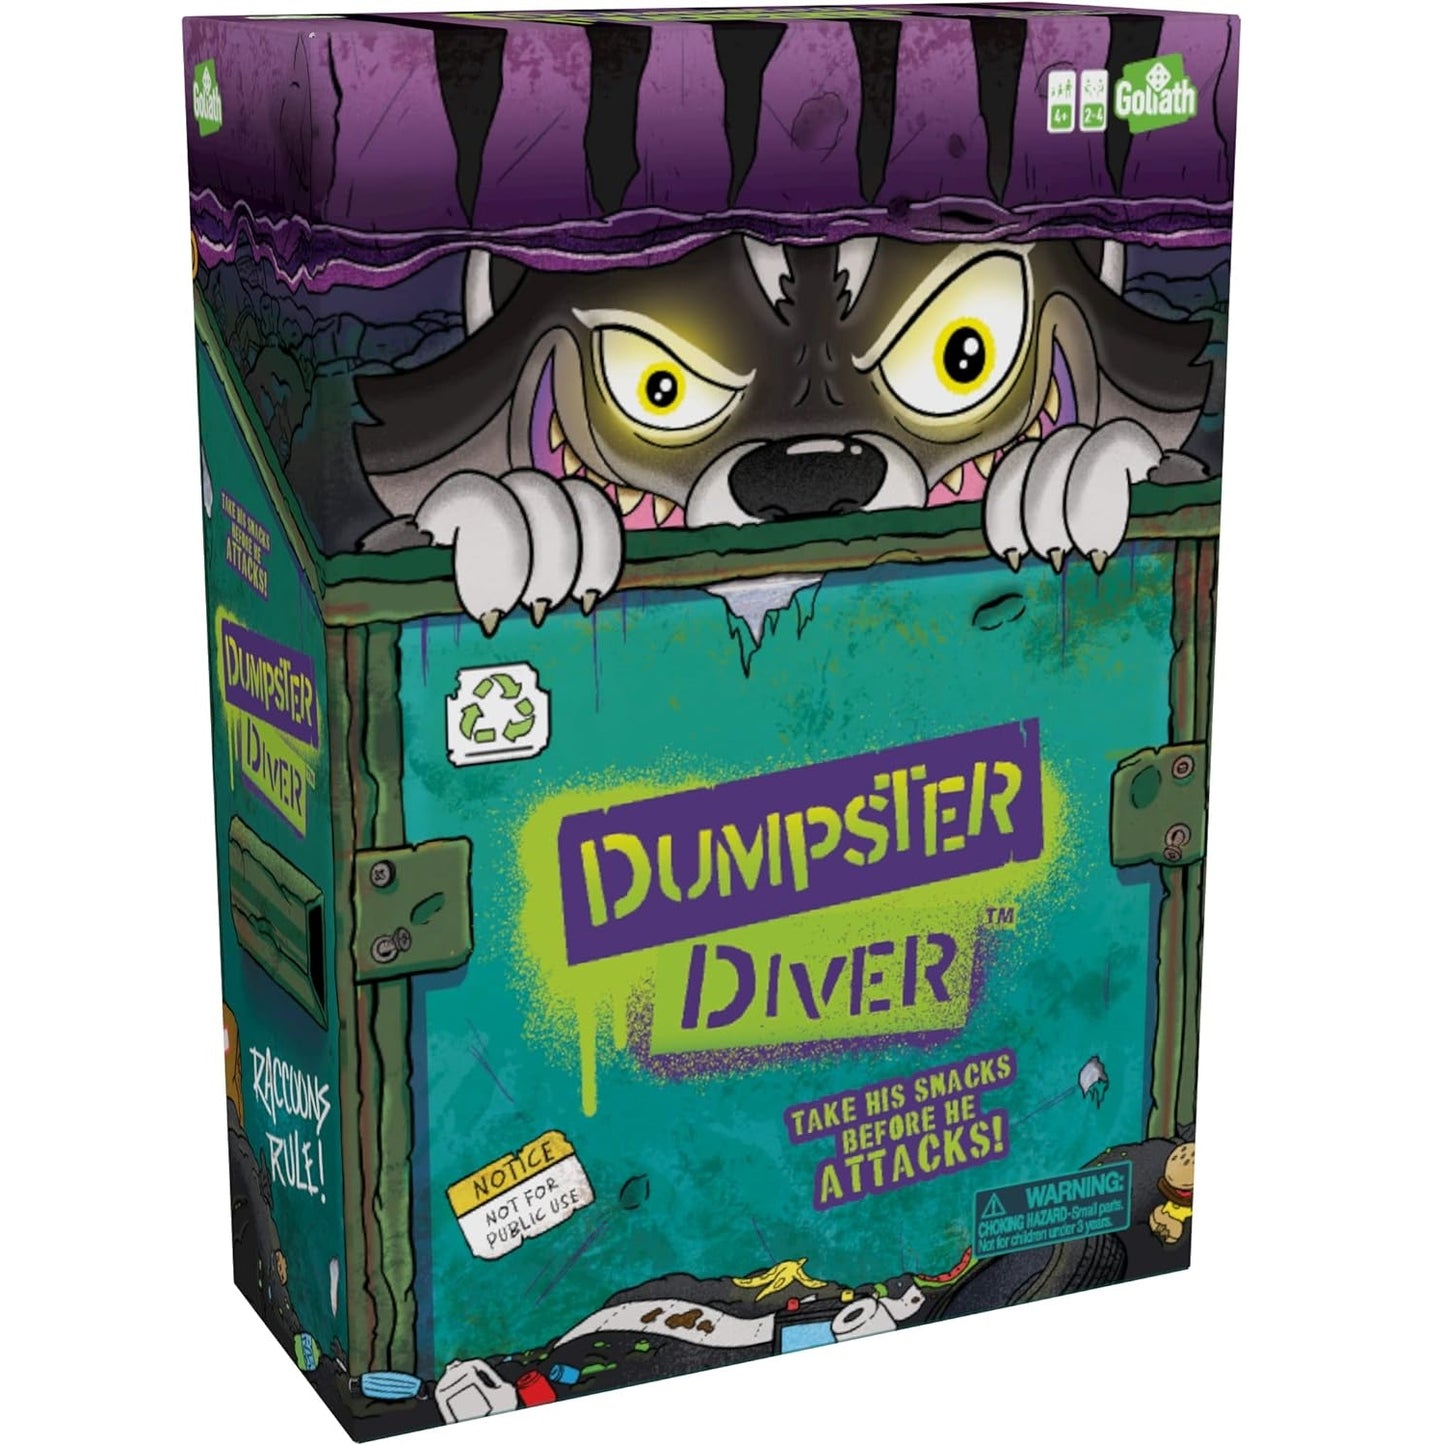 Goliath Dumpster Diver Matching & Action Game 垃圾箱浣熊 配對及搶先遊戲